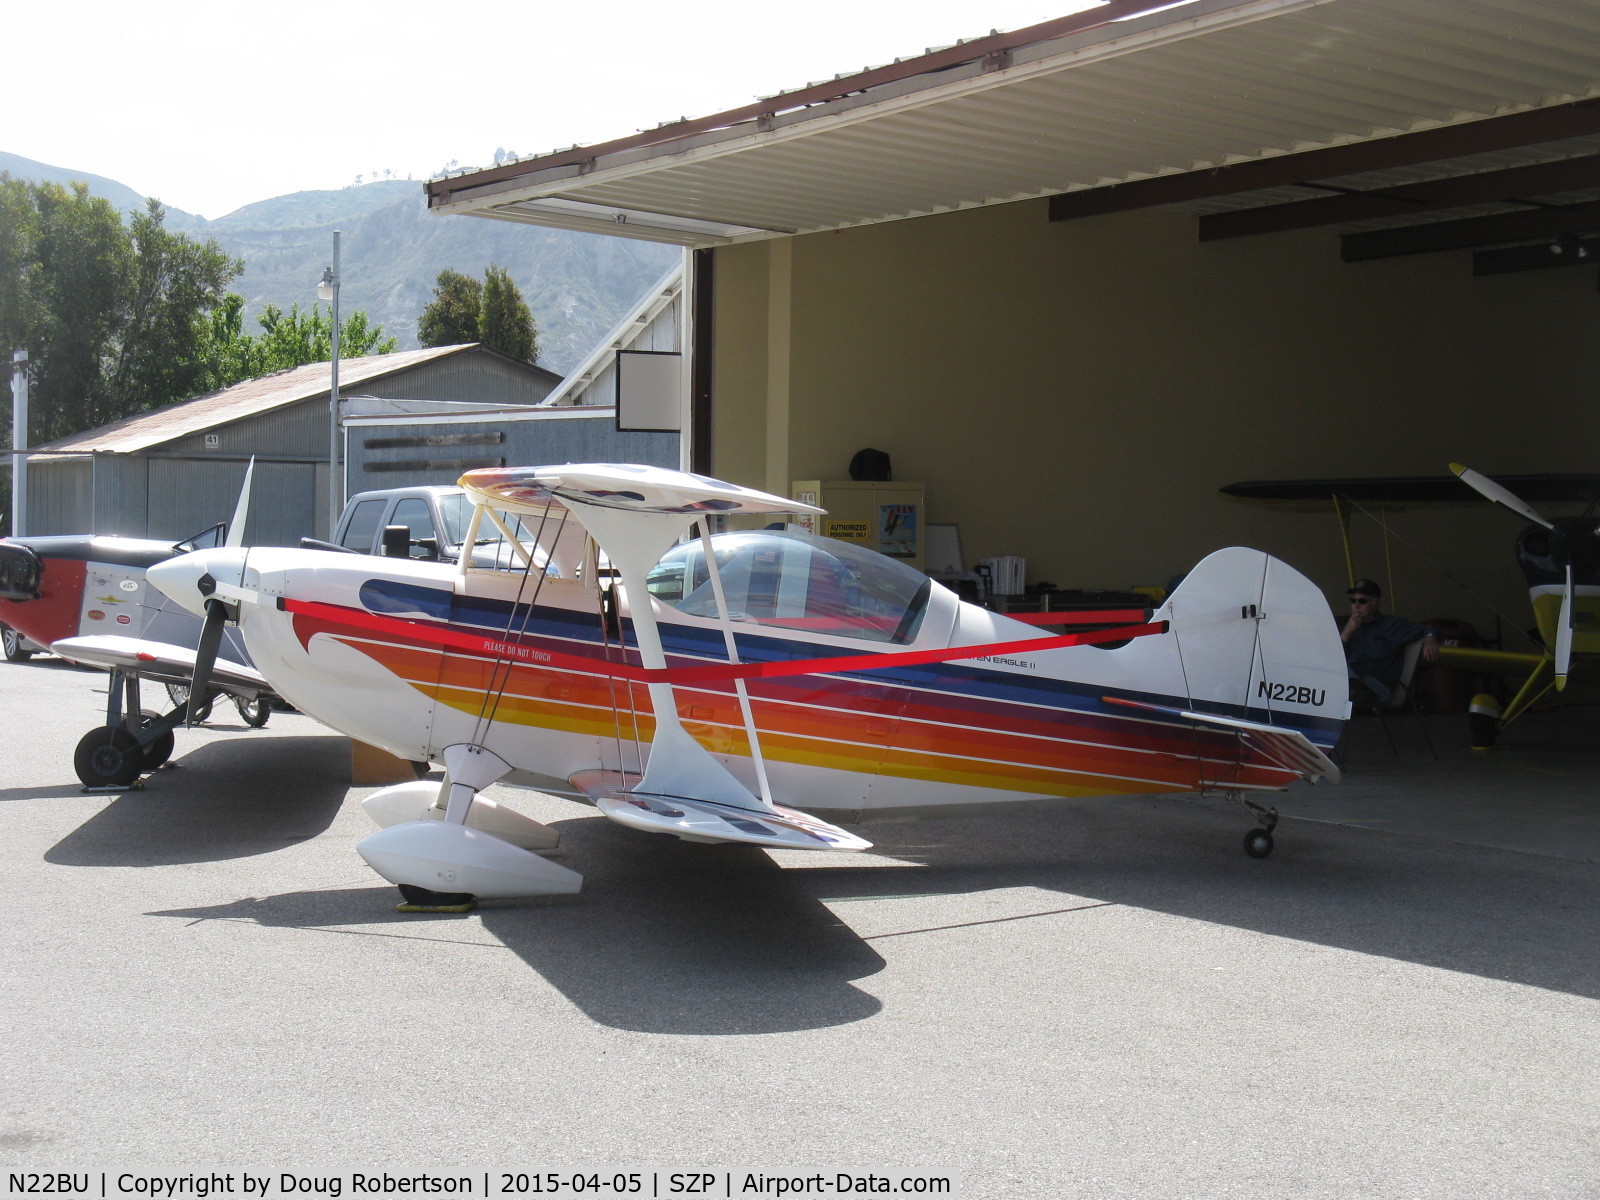 N22BU, 1987 Christen Eagle II C/N BRUNER 0001, 1987 Bruner/Ulmer CHRISTEN EAGLE II, Lycoming AEIO-360 180 Hp, fully aerobatic